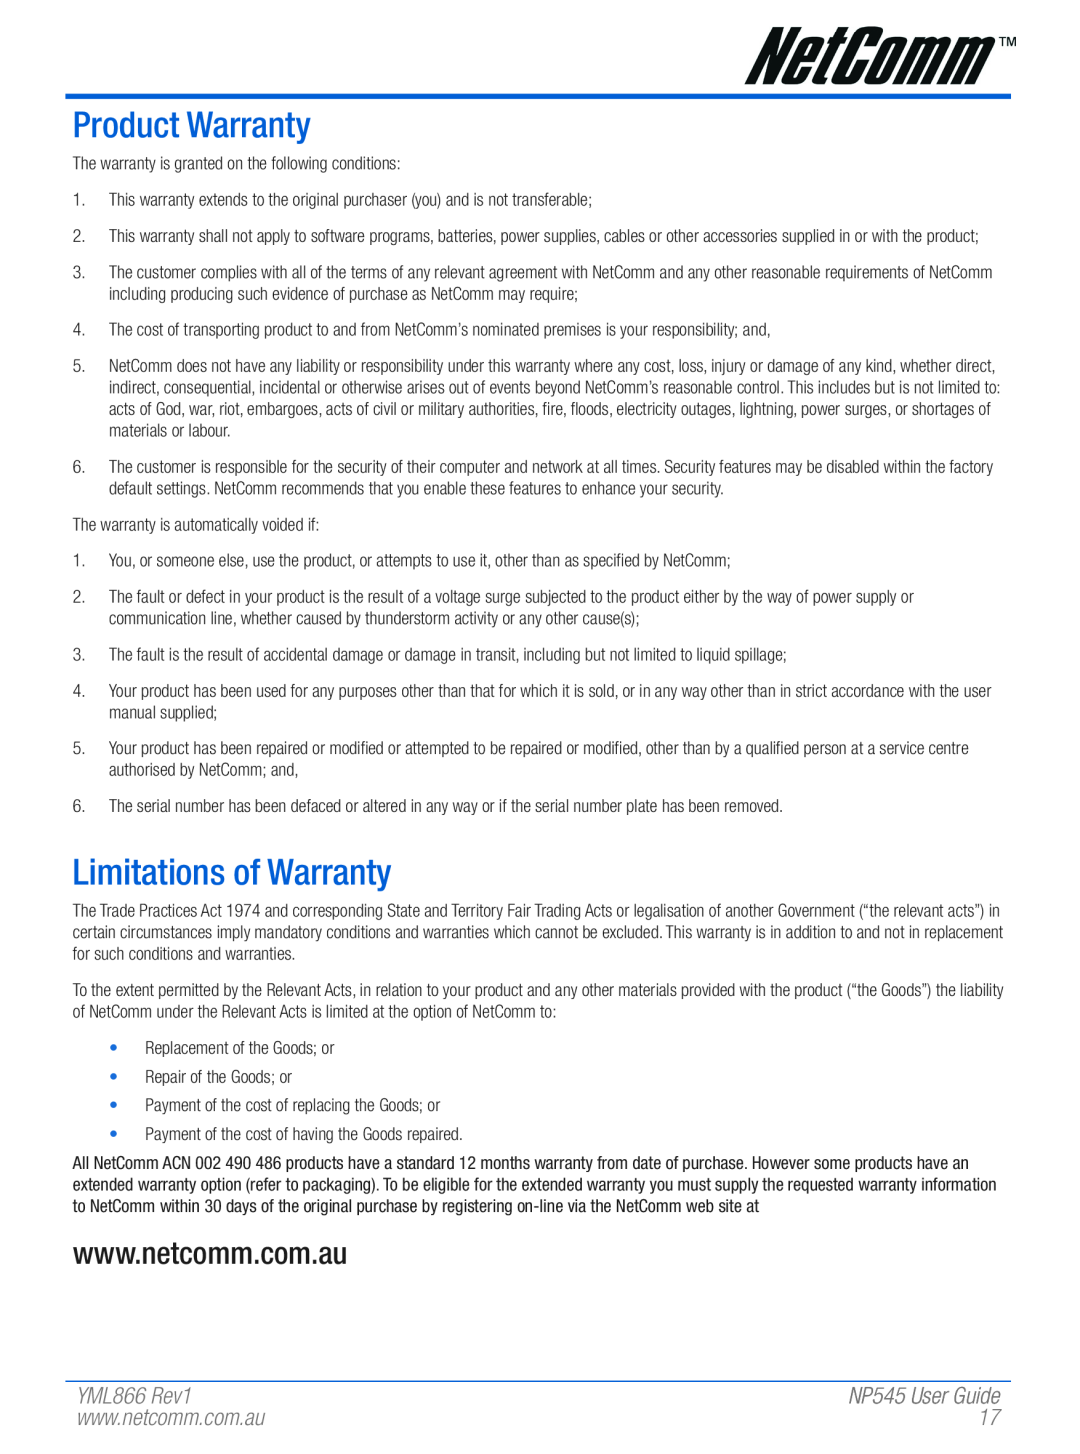 NetComm manual Product Warranty, Limitations of Warranty, YML866 Rev1, NP545 User Guide 